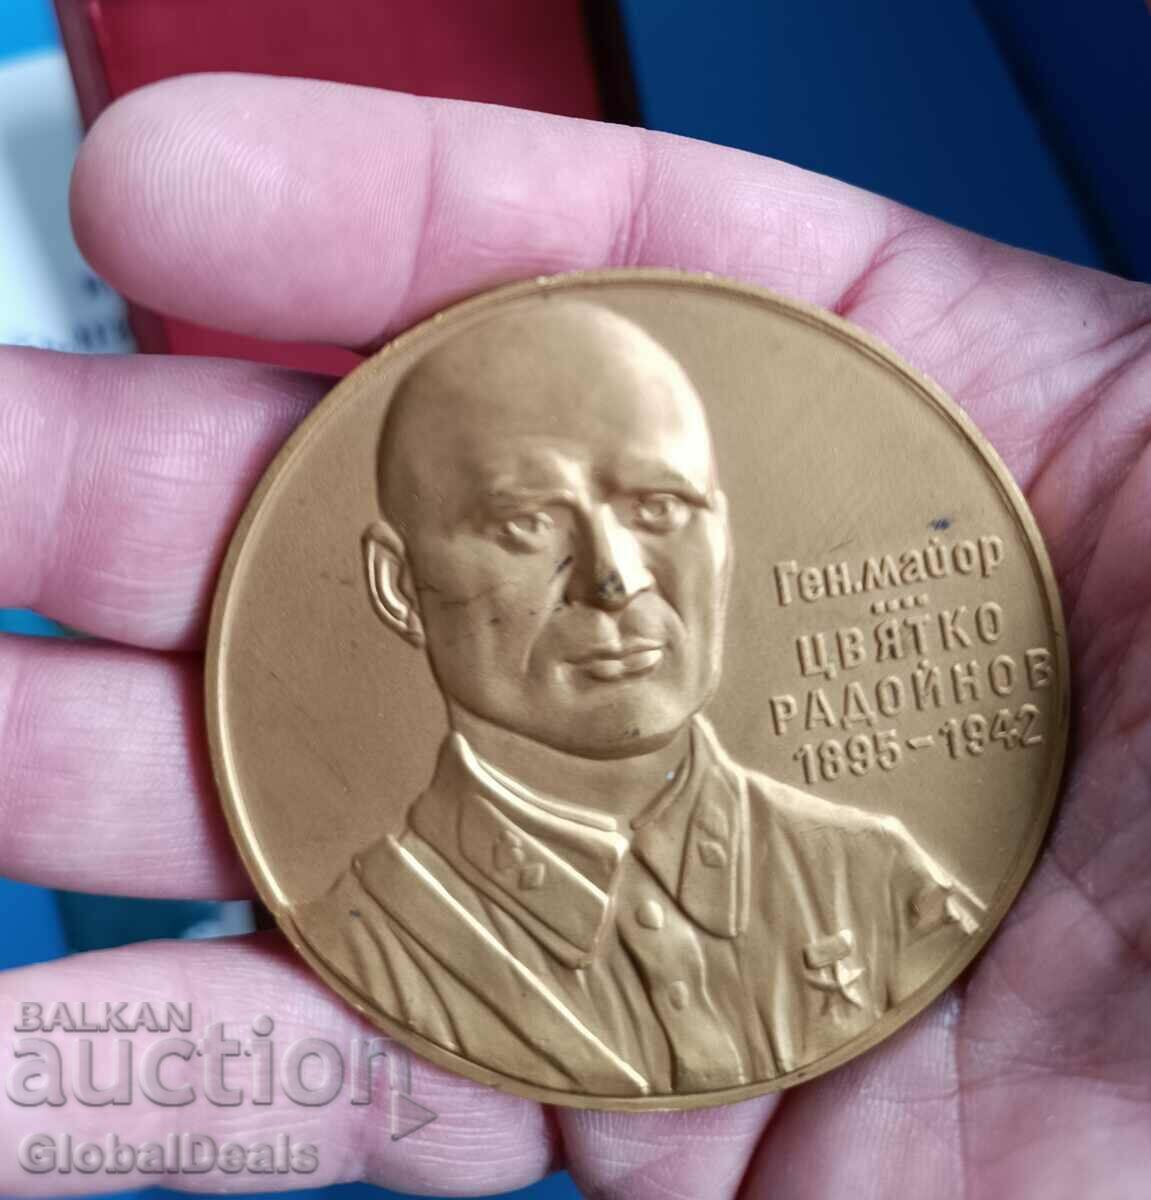 Medalie la masa de scufundări generalul Tsviatko Radoynov